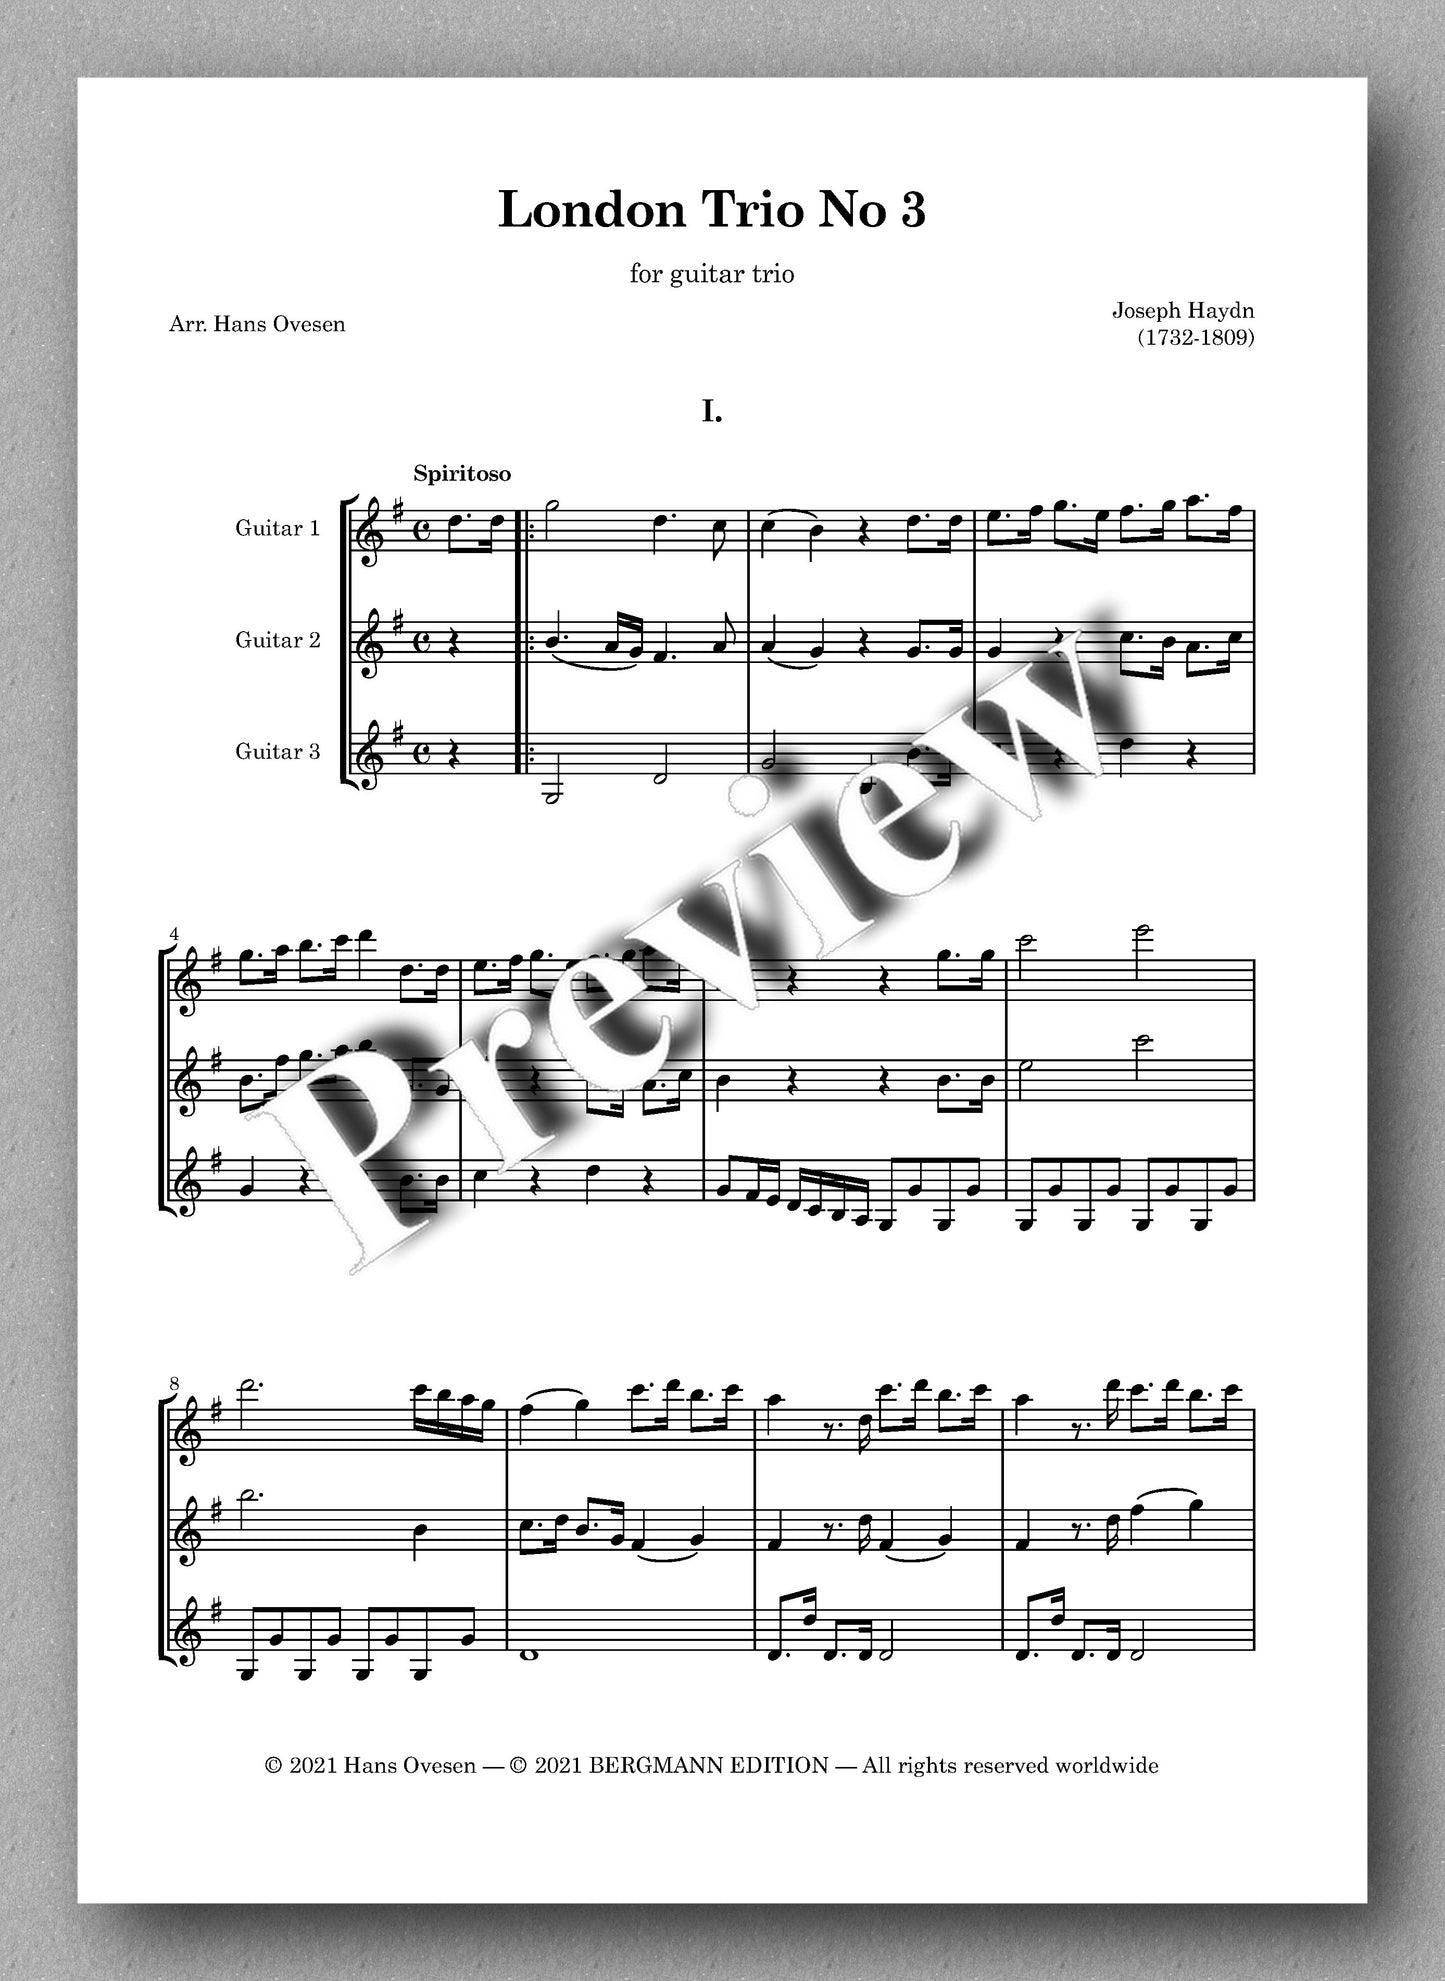 Haydn-Ovesen, London Trios No. 3-4 - music score 1